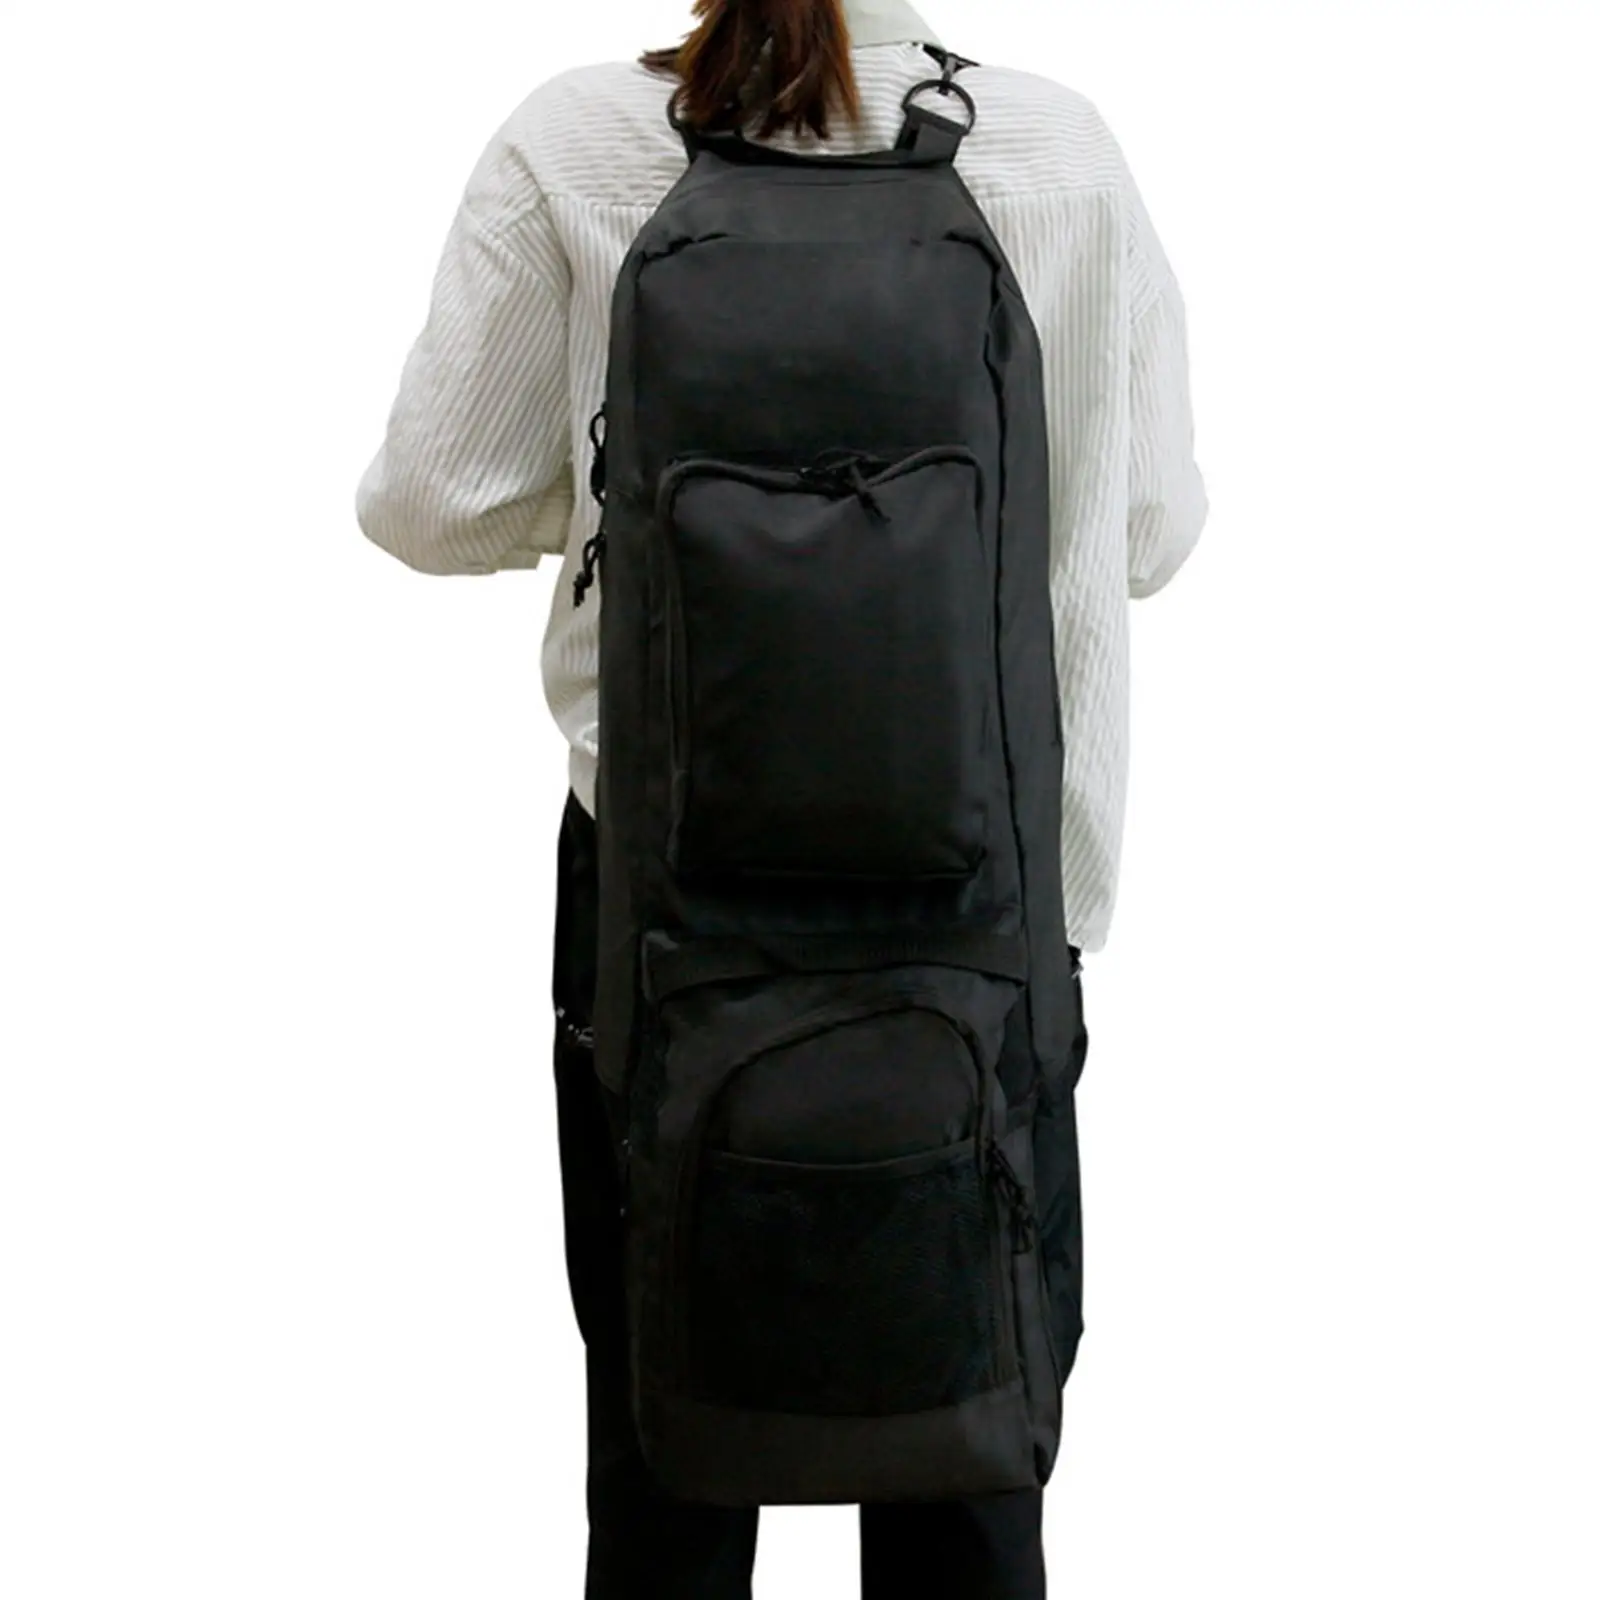 Yoga Backpack Bag Luggage Bag Durable Multifunction Shoulder Bag Yoga Mat Bag Sports Bags for Camping Sports Home Office Fitness